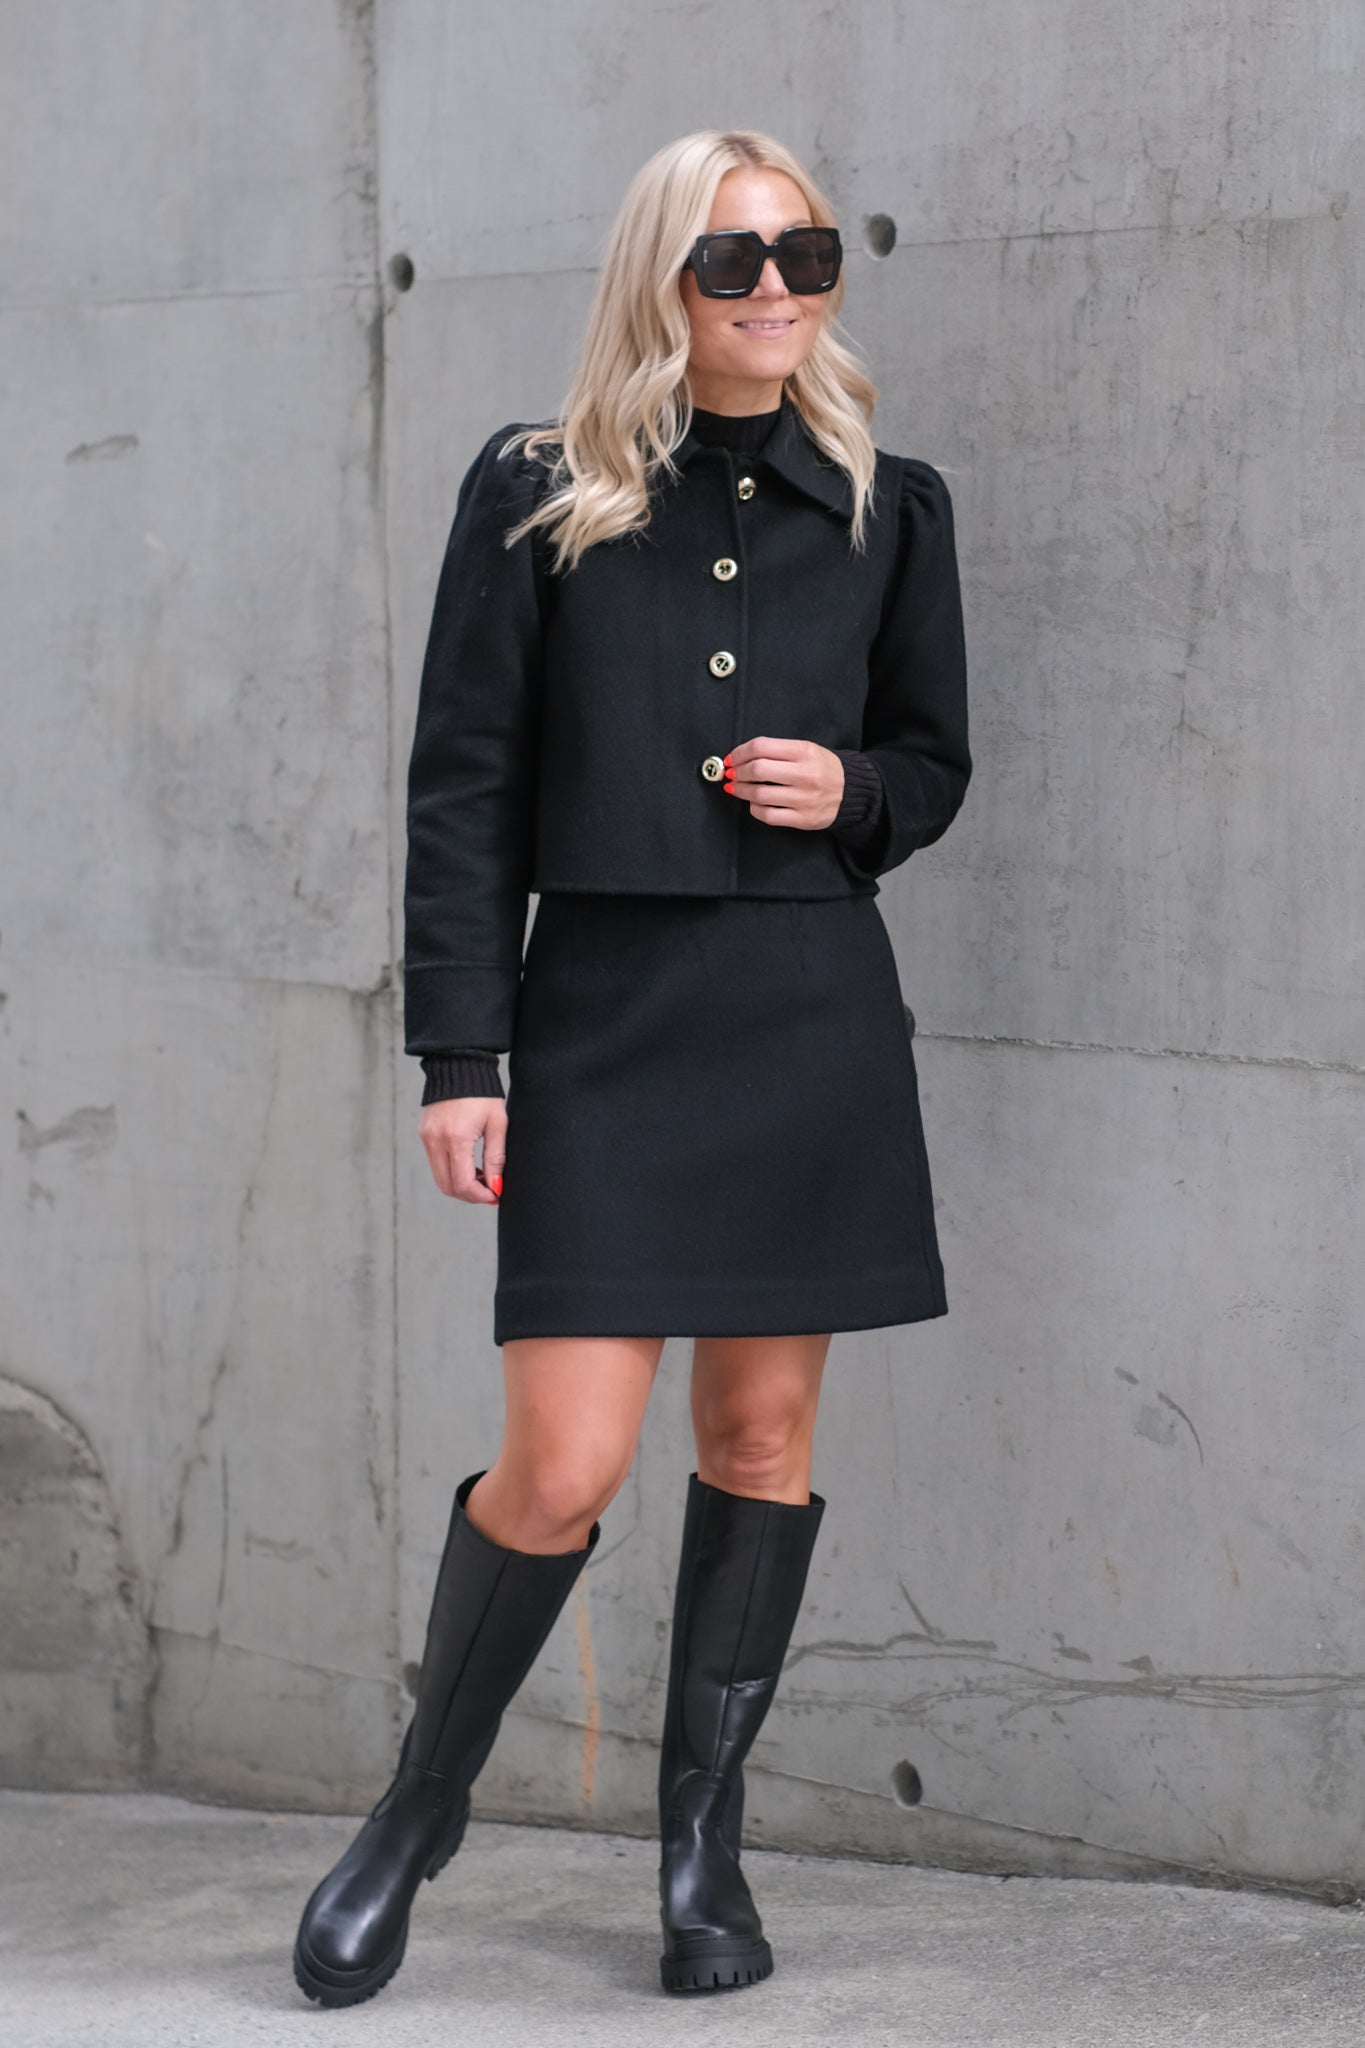 Tailored Mini Skirt Black